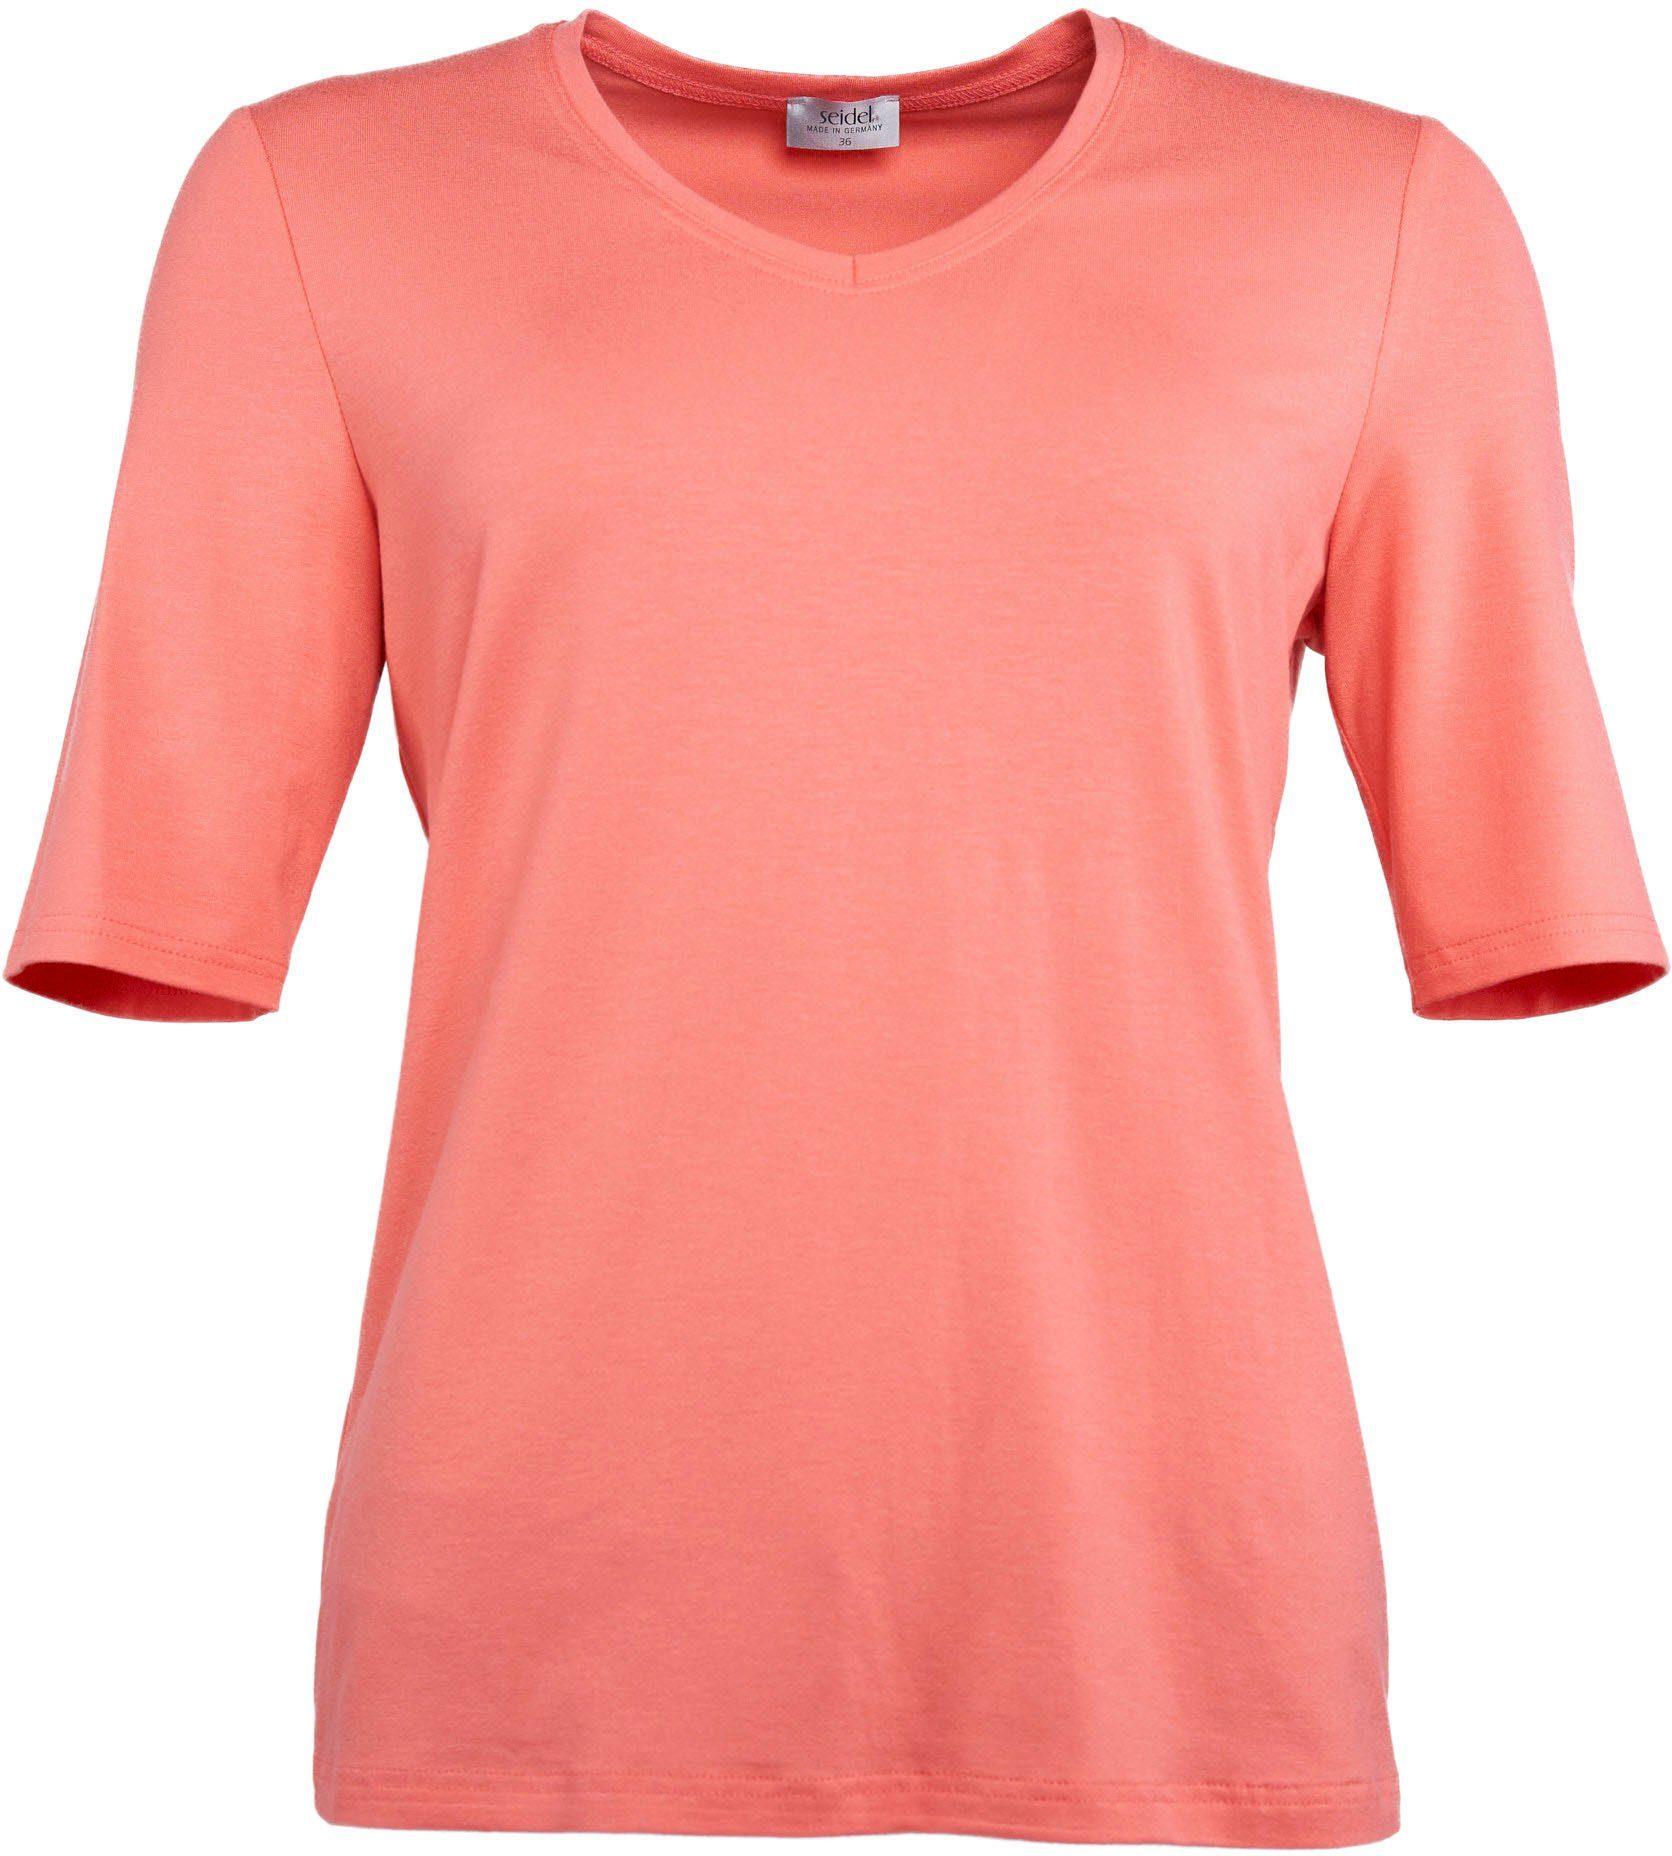 GERMANY Moden V-Shirt IN apricot Halbarm softem Material, Seidel aus mit MADE